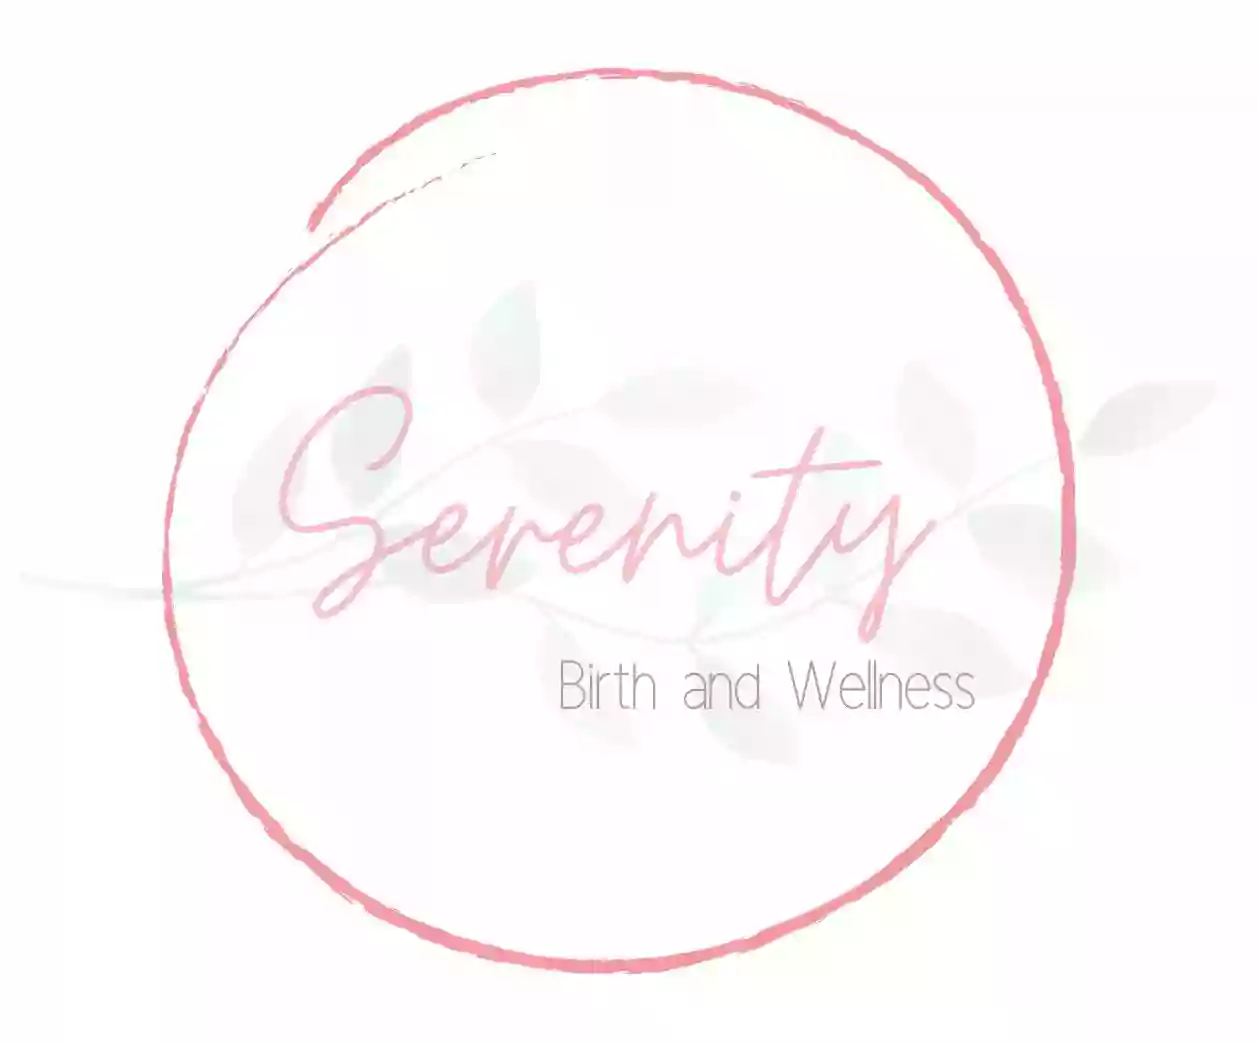 Serenity Birth & Wellness